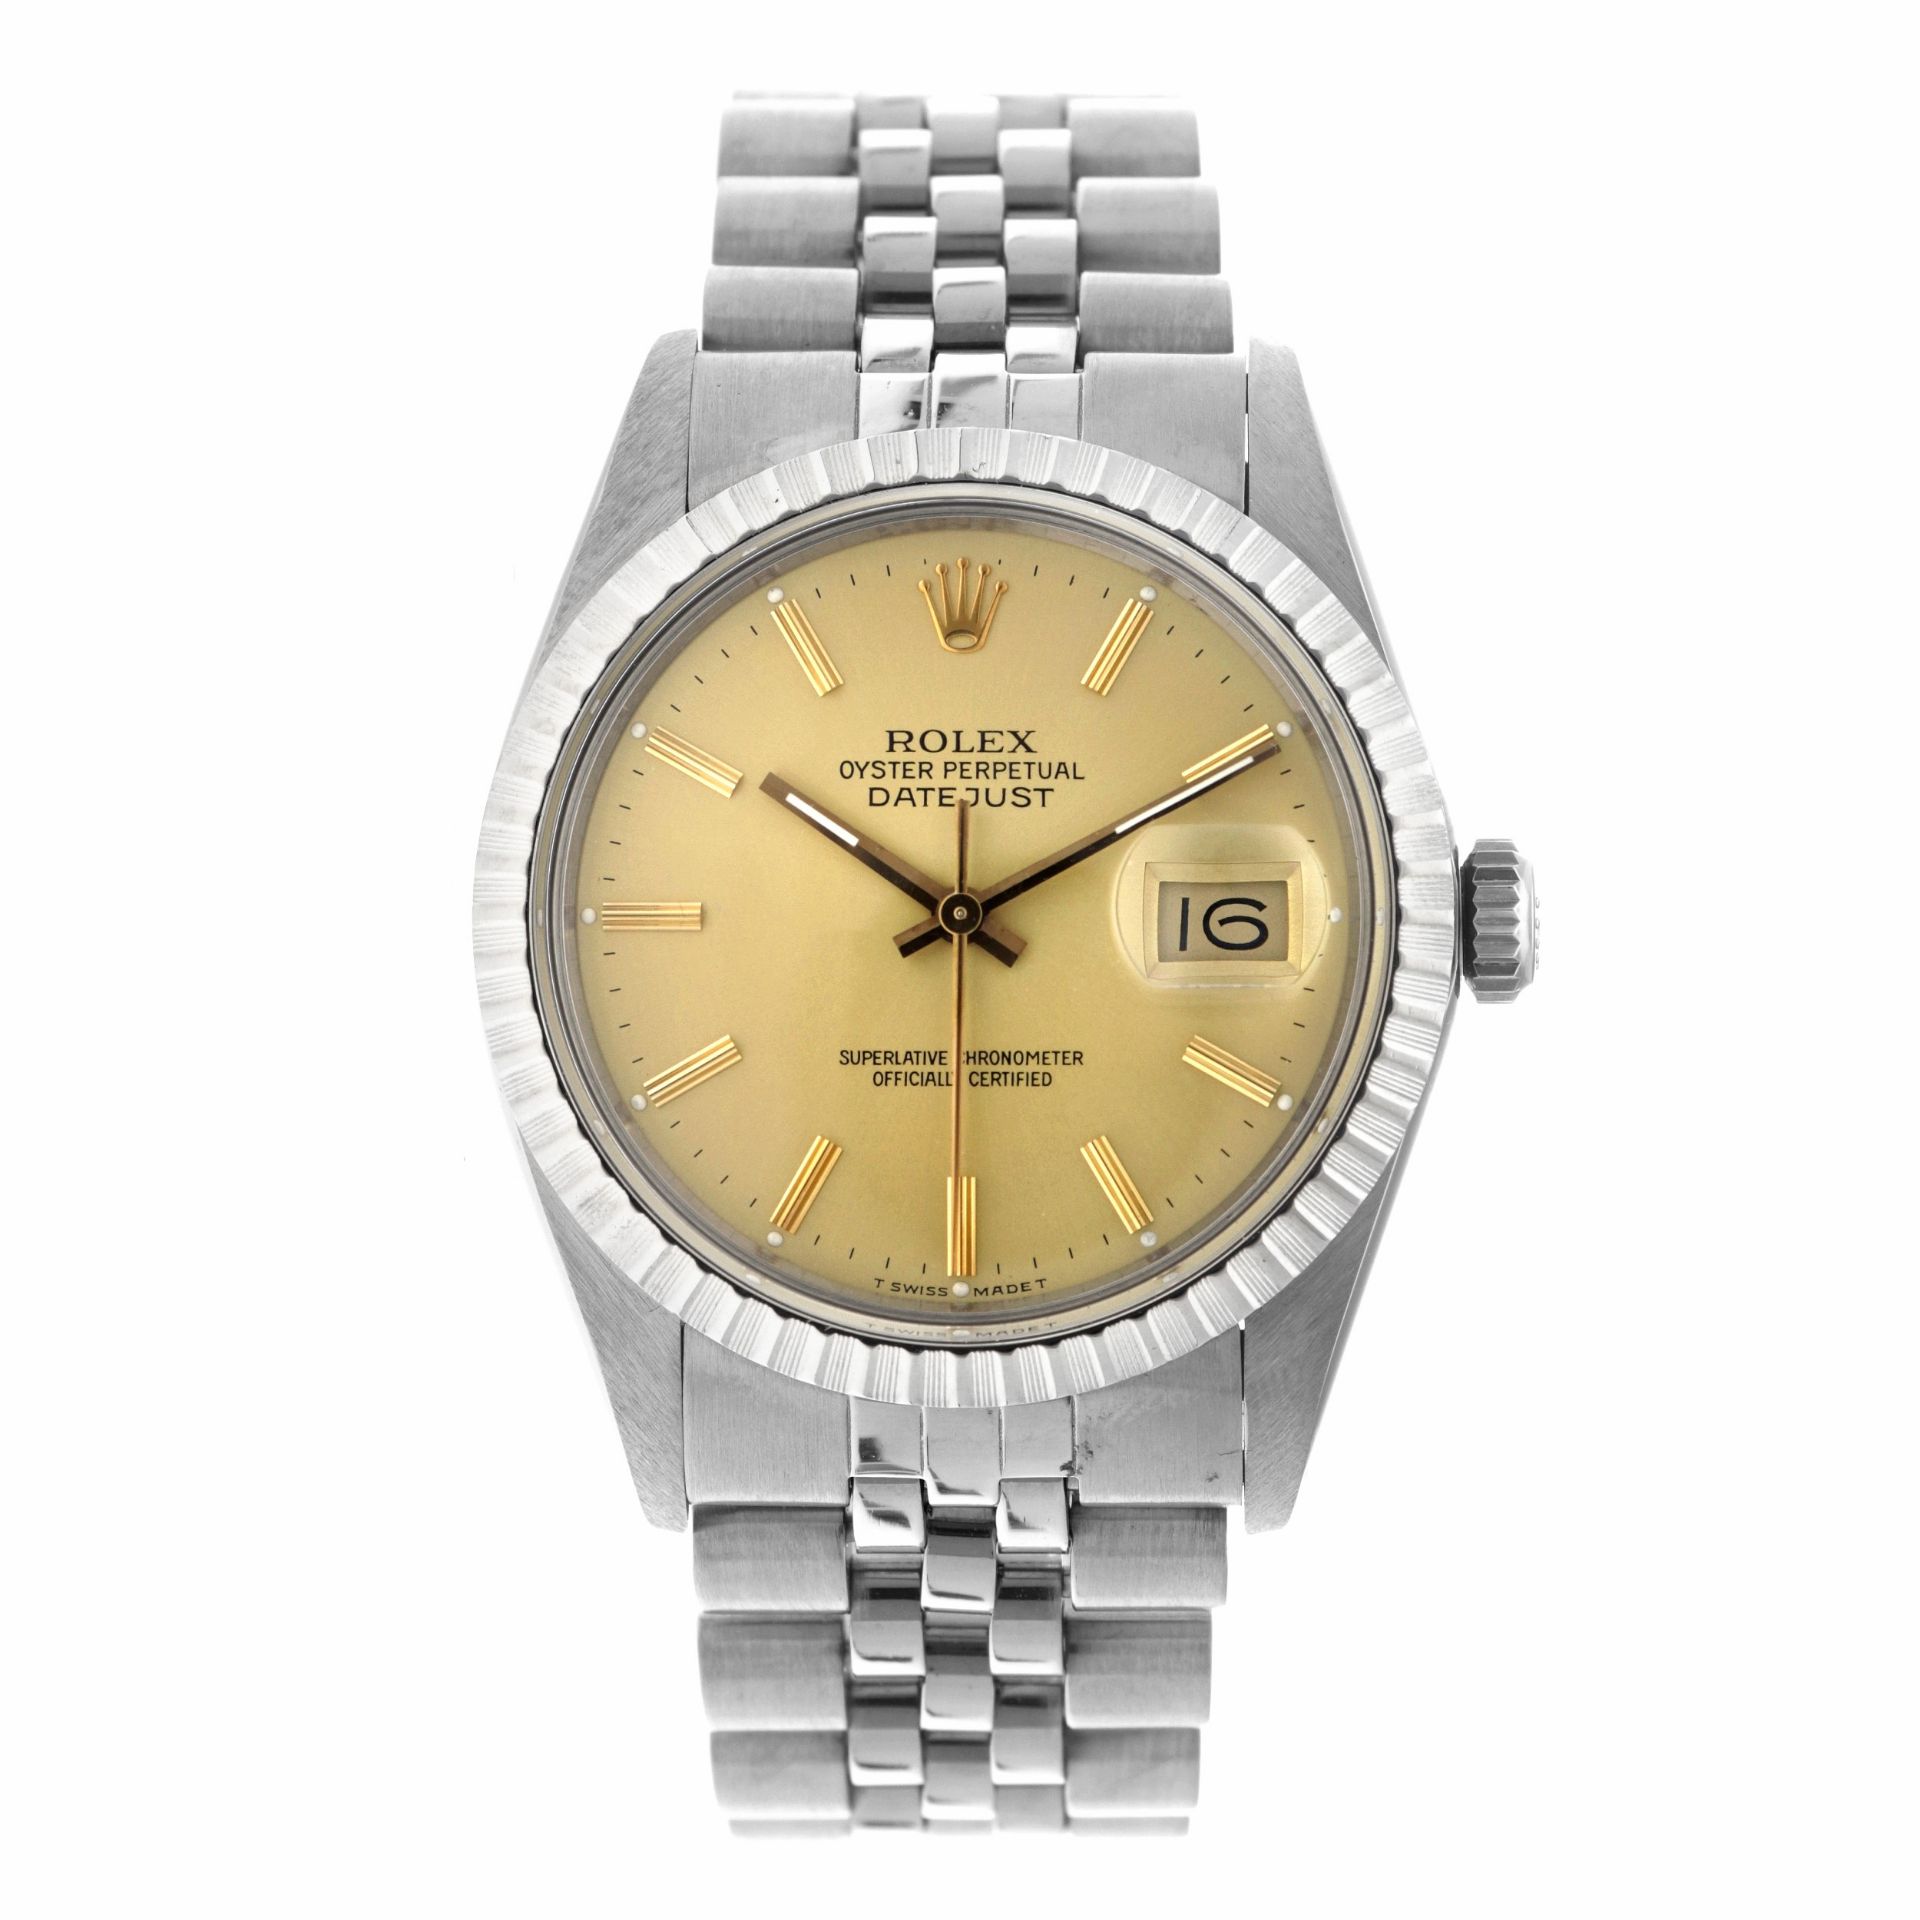 Rolex Datejust 16030 - Men's wrist watch - approx. 1987.